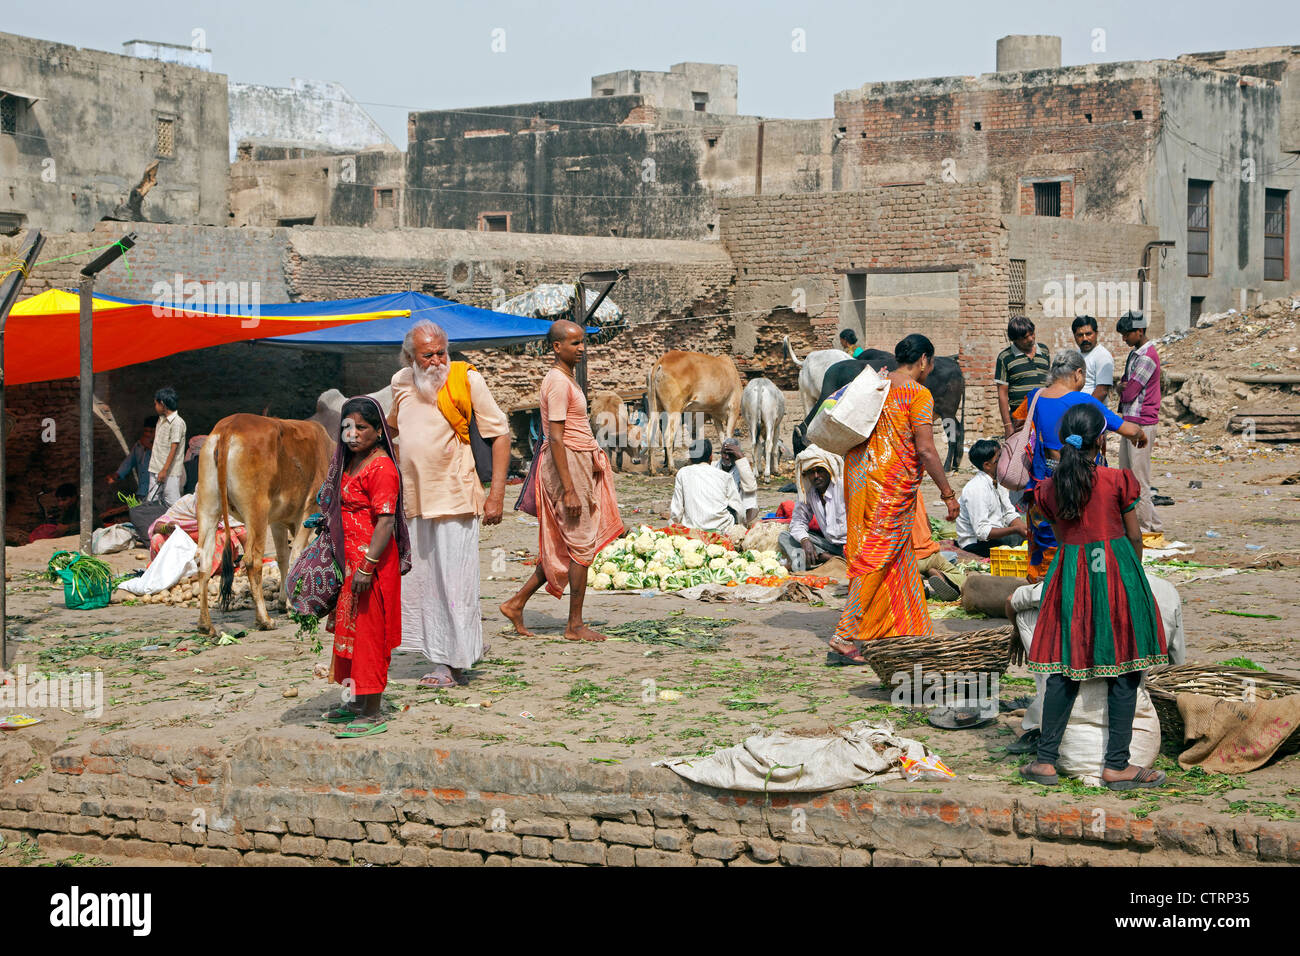 Women dressed in saris shopping for vegetables at market in Vrindavan, Uttar Pradesh, India Stock Photo